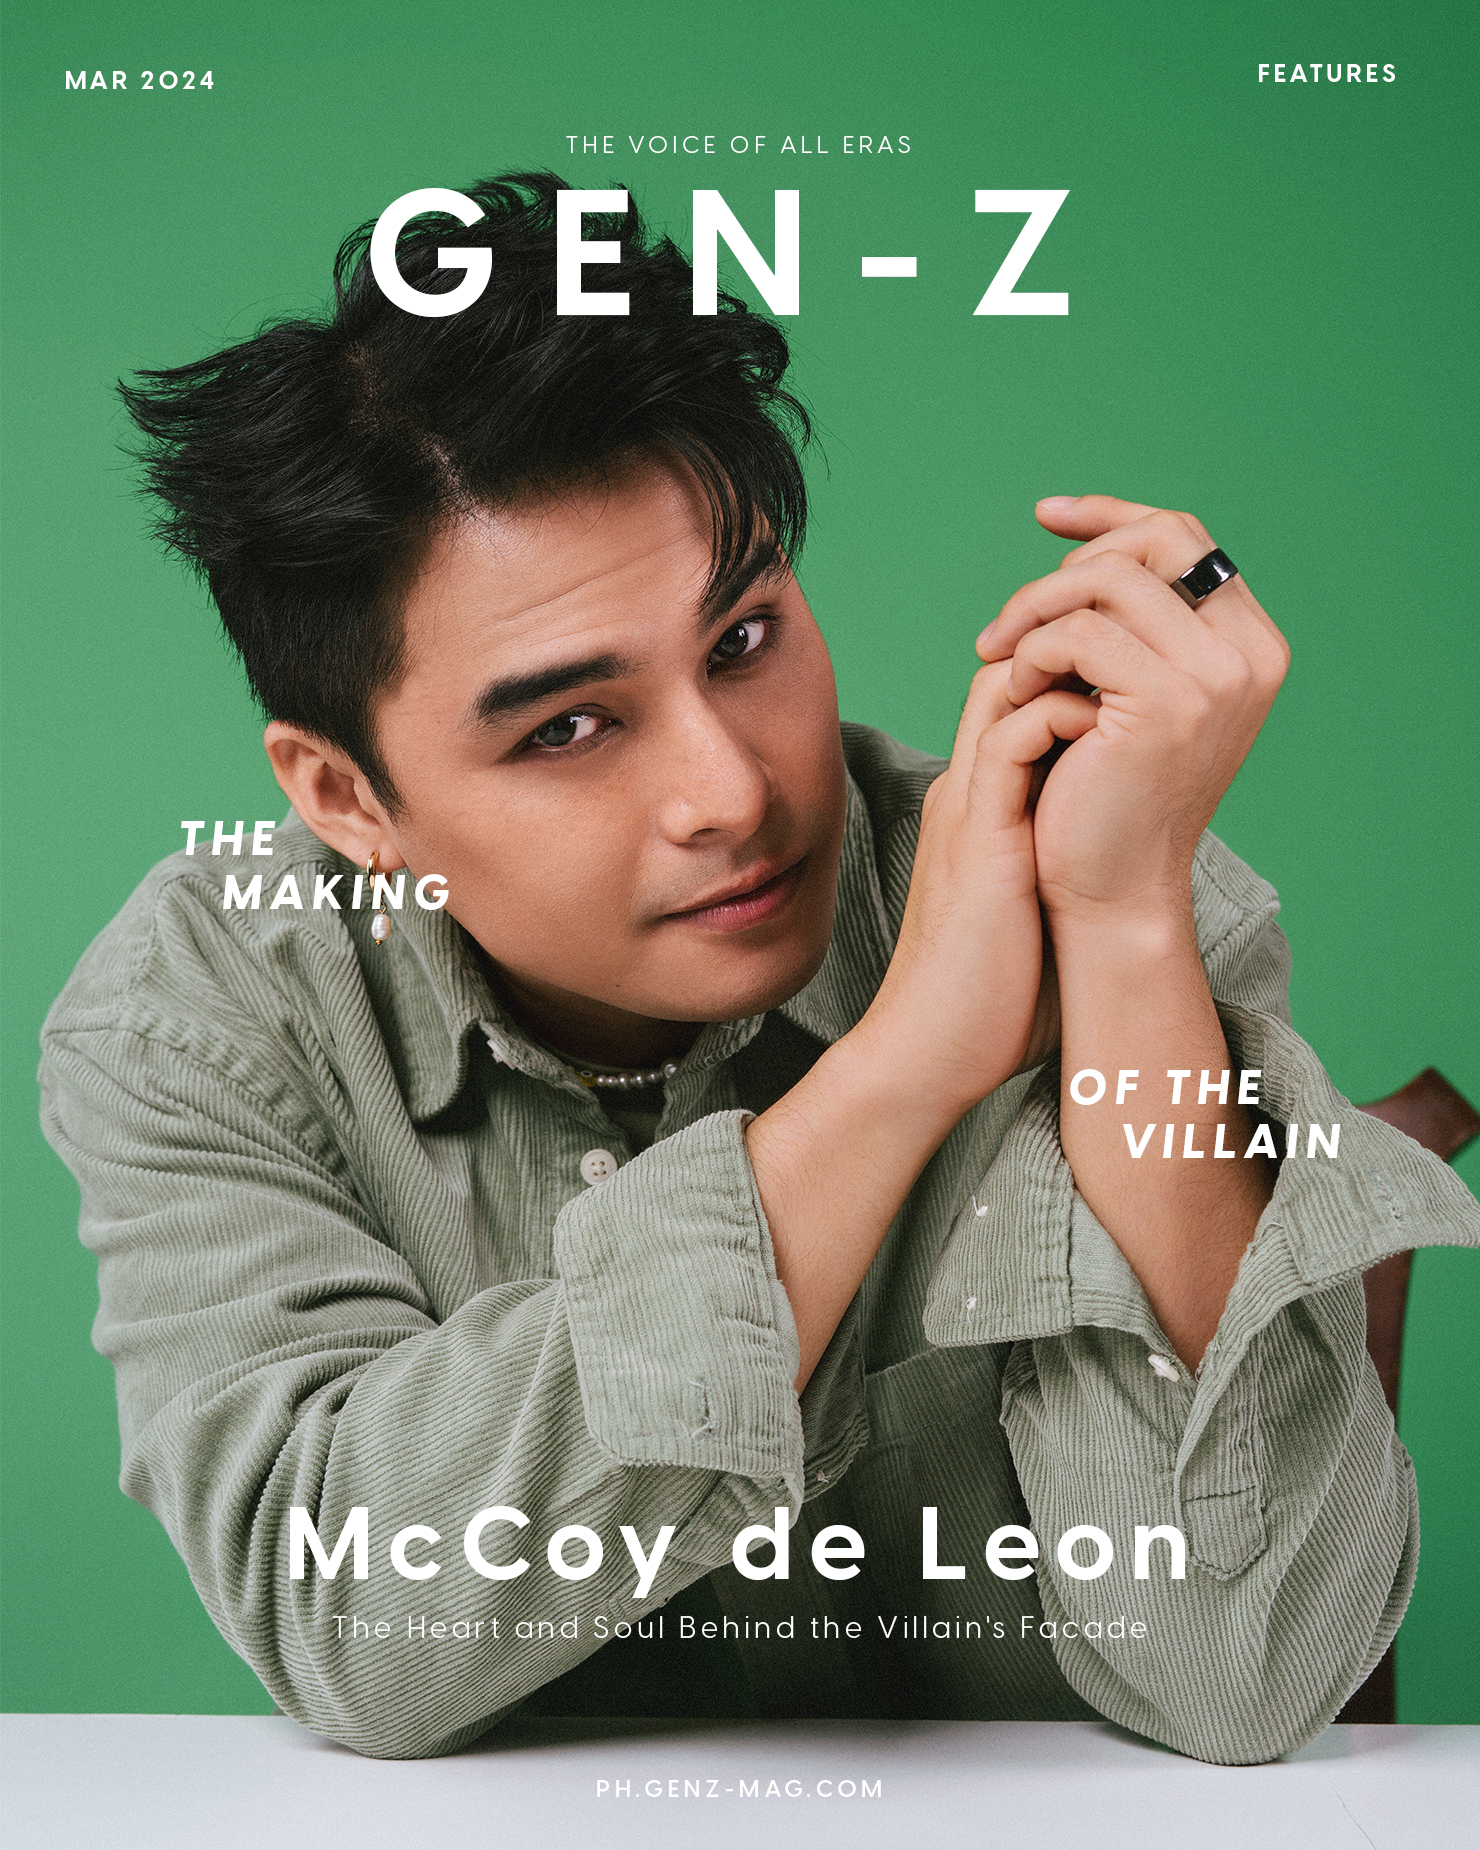 Mccoy-de-Leon-Gen-Z-Features